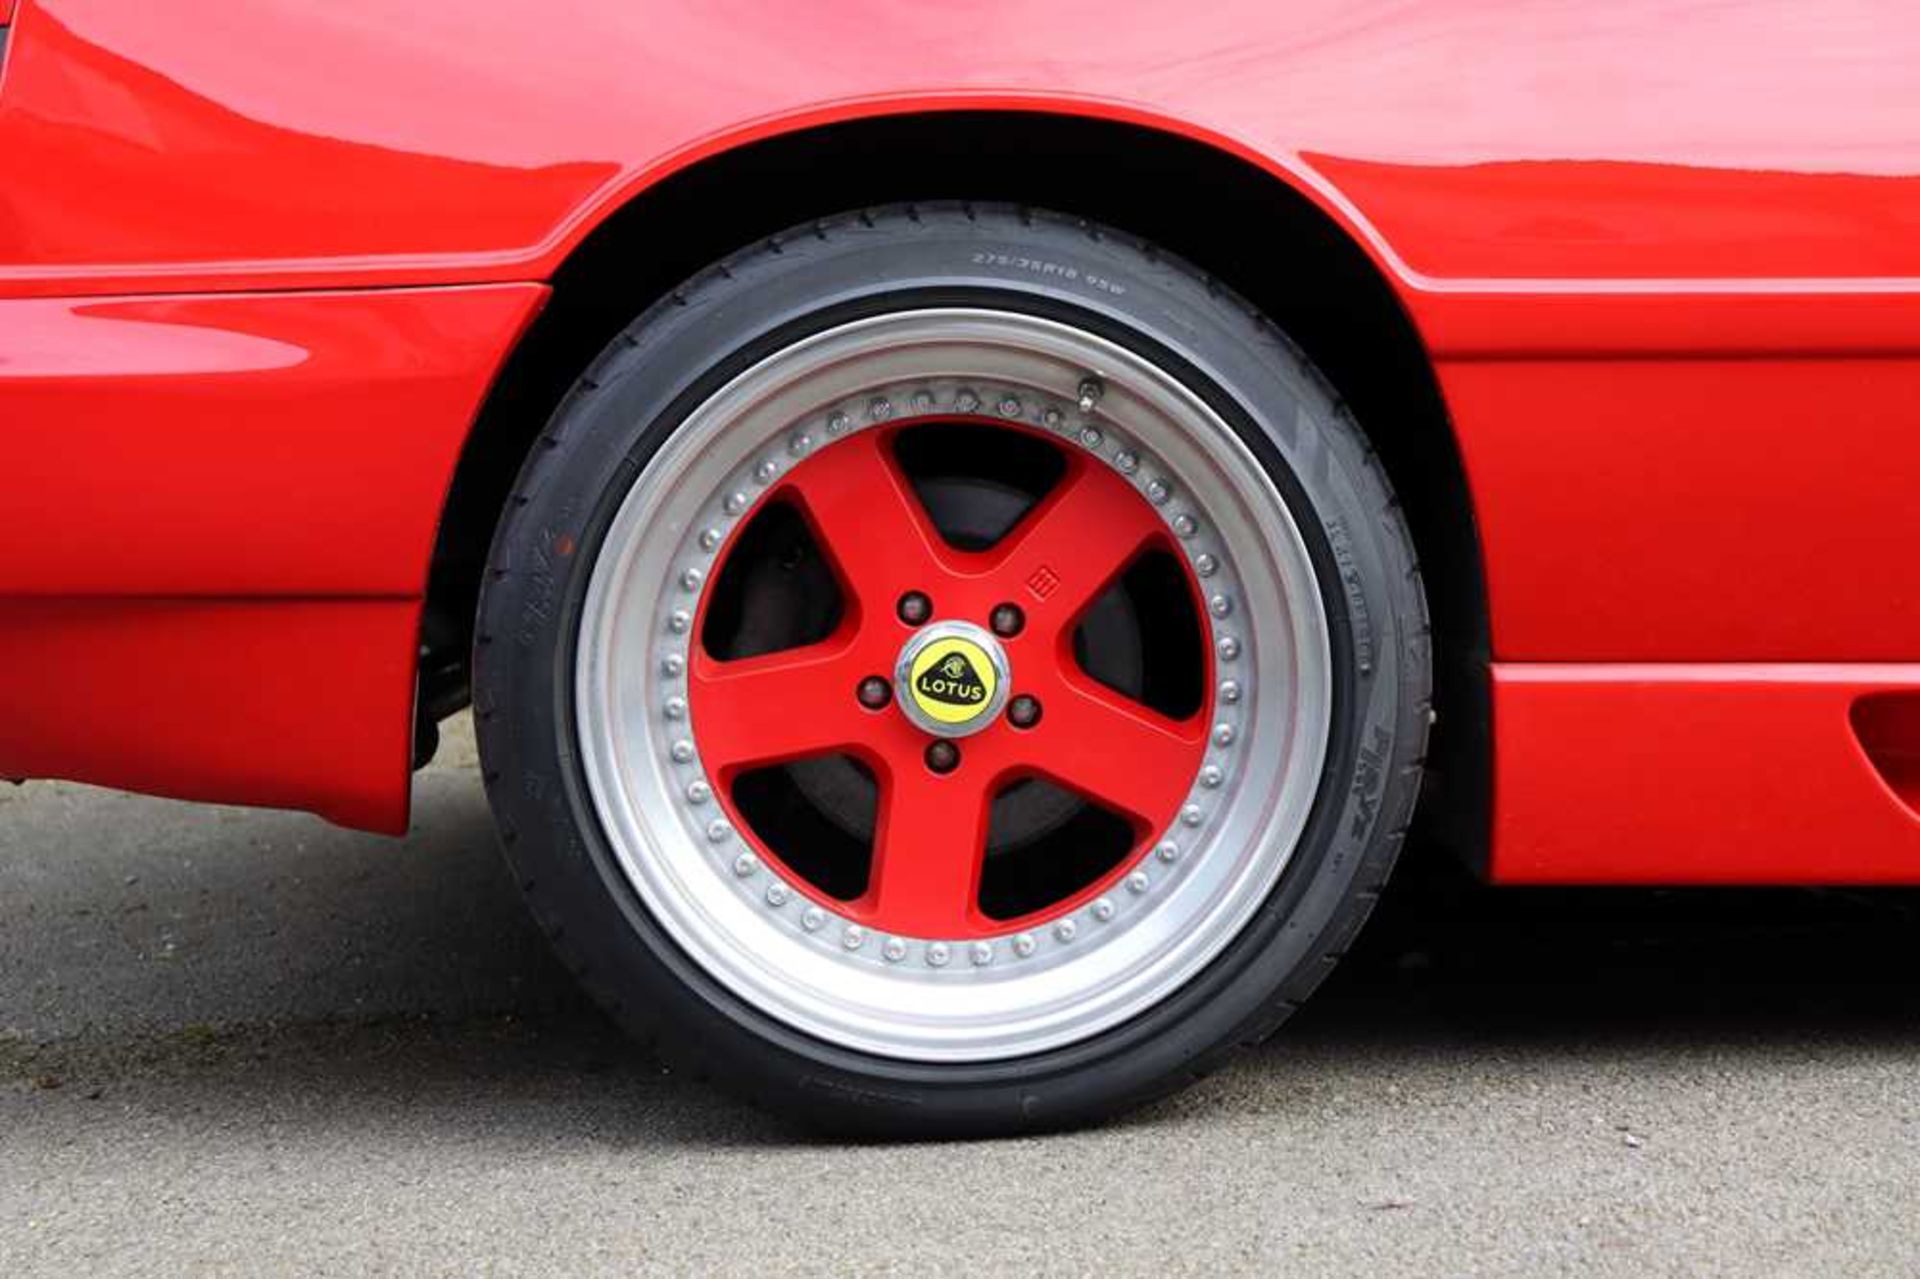 1989 Lotus Esprit Turbo Just 37,000 recorded miles - Image 33 of 72